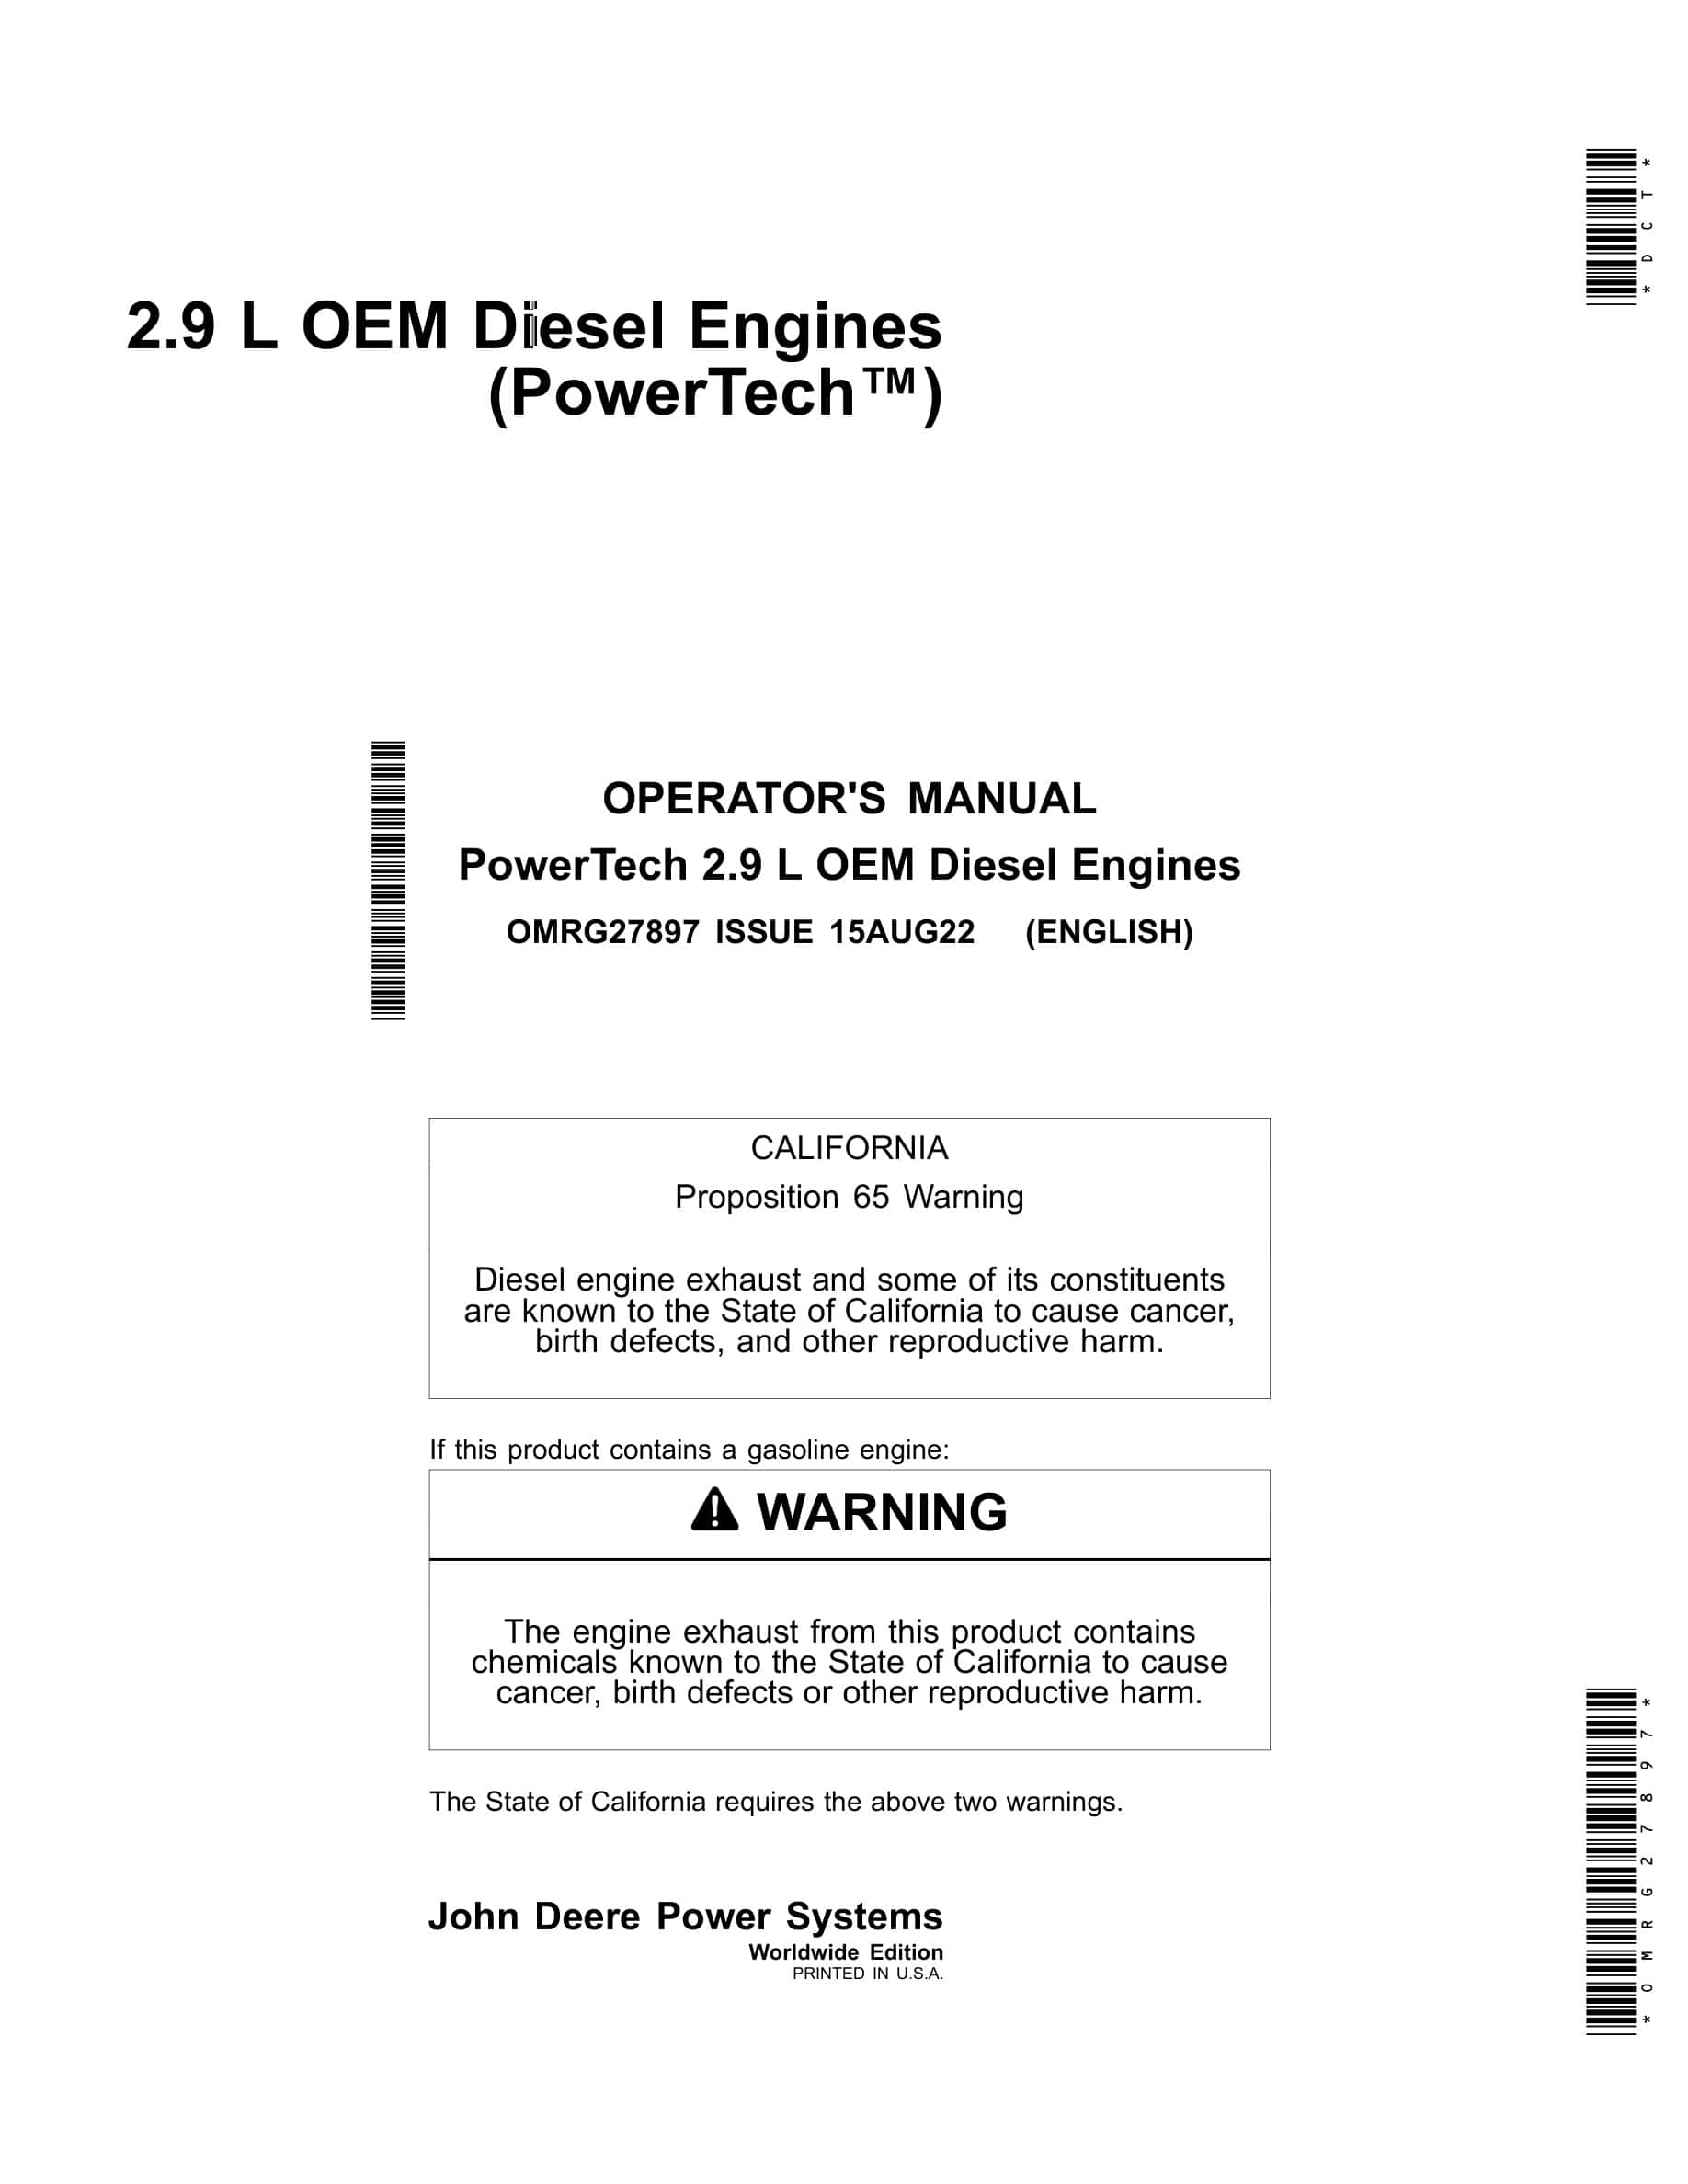 John Deere PowerTech PowerTech 2.9 L OEM Diesel Engines Operator Manual OMRG27897-1